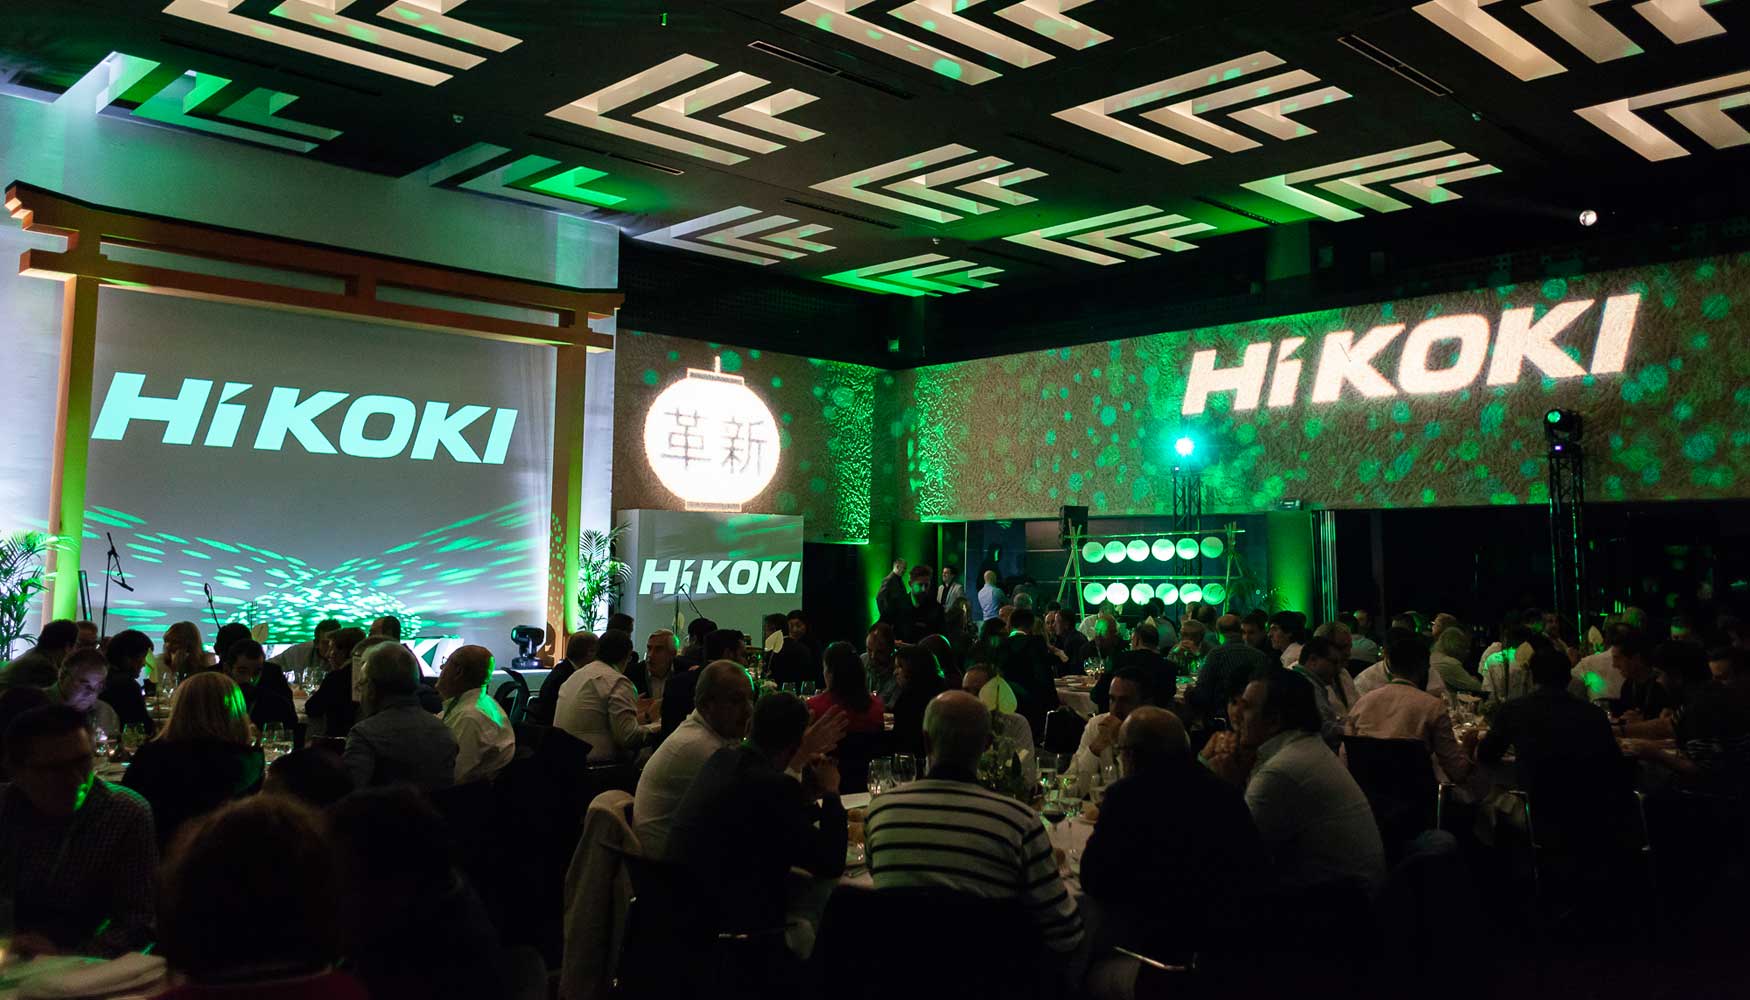 El Hotel Hilton Aeropuerto de Madrid acogi la presentacin de la nueva marca Hikoki